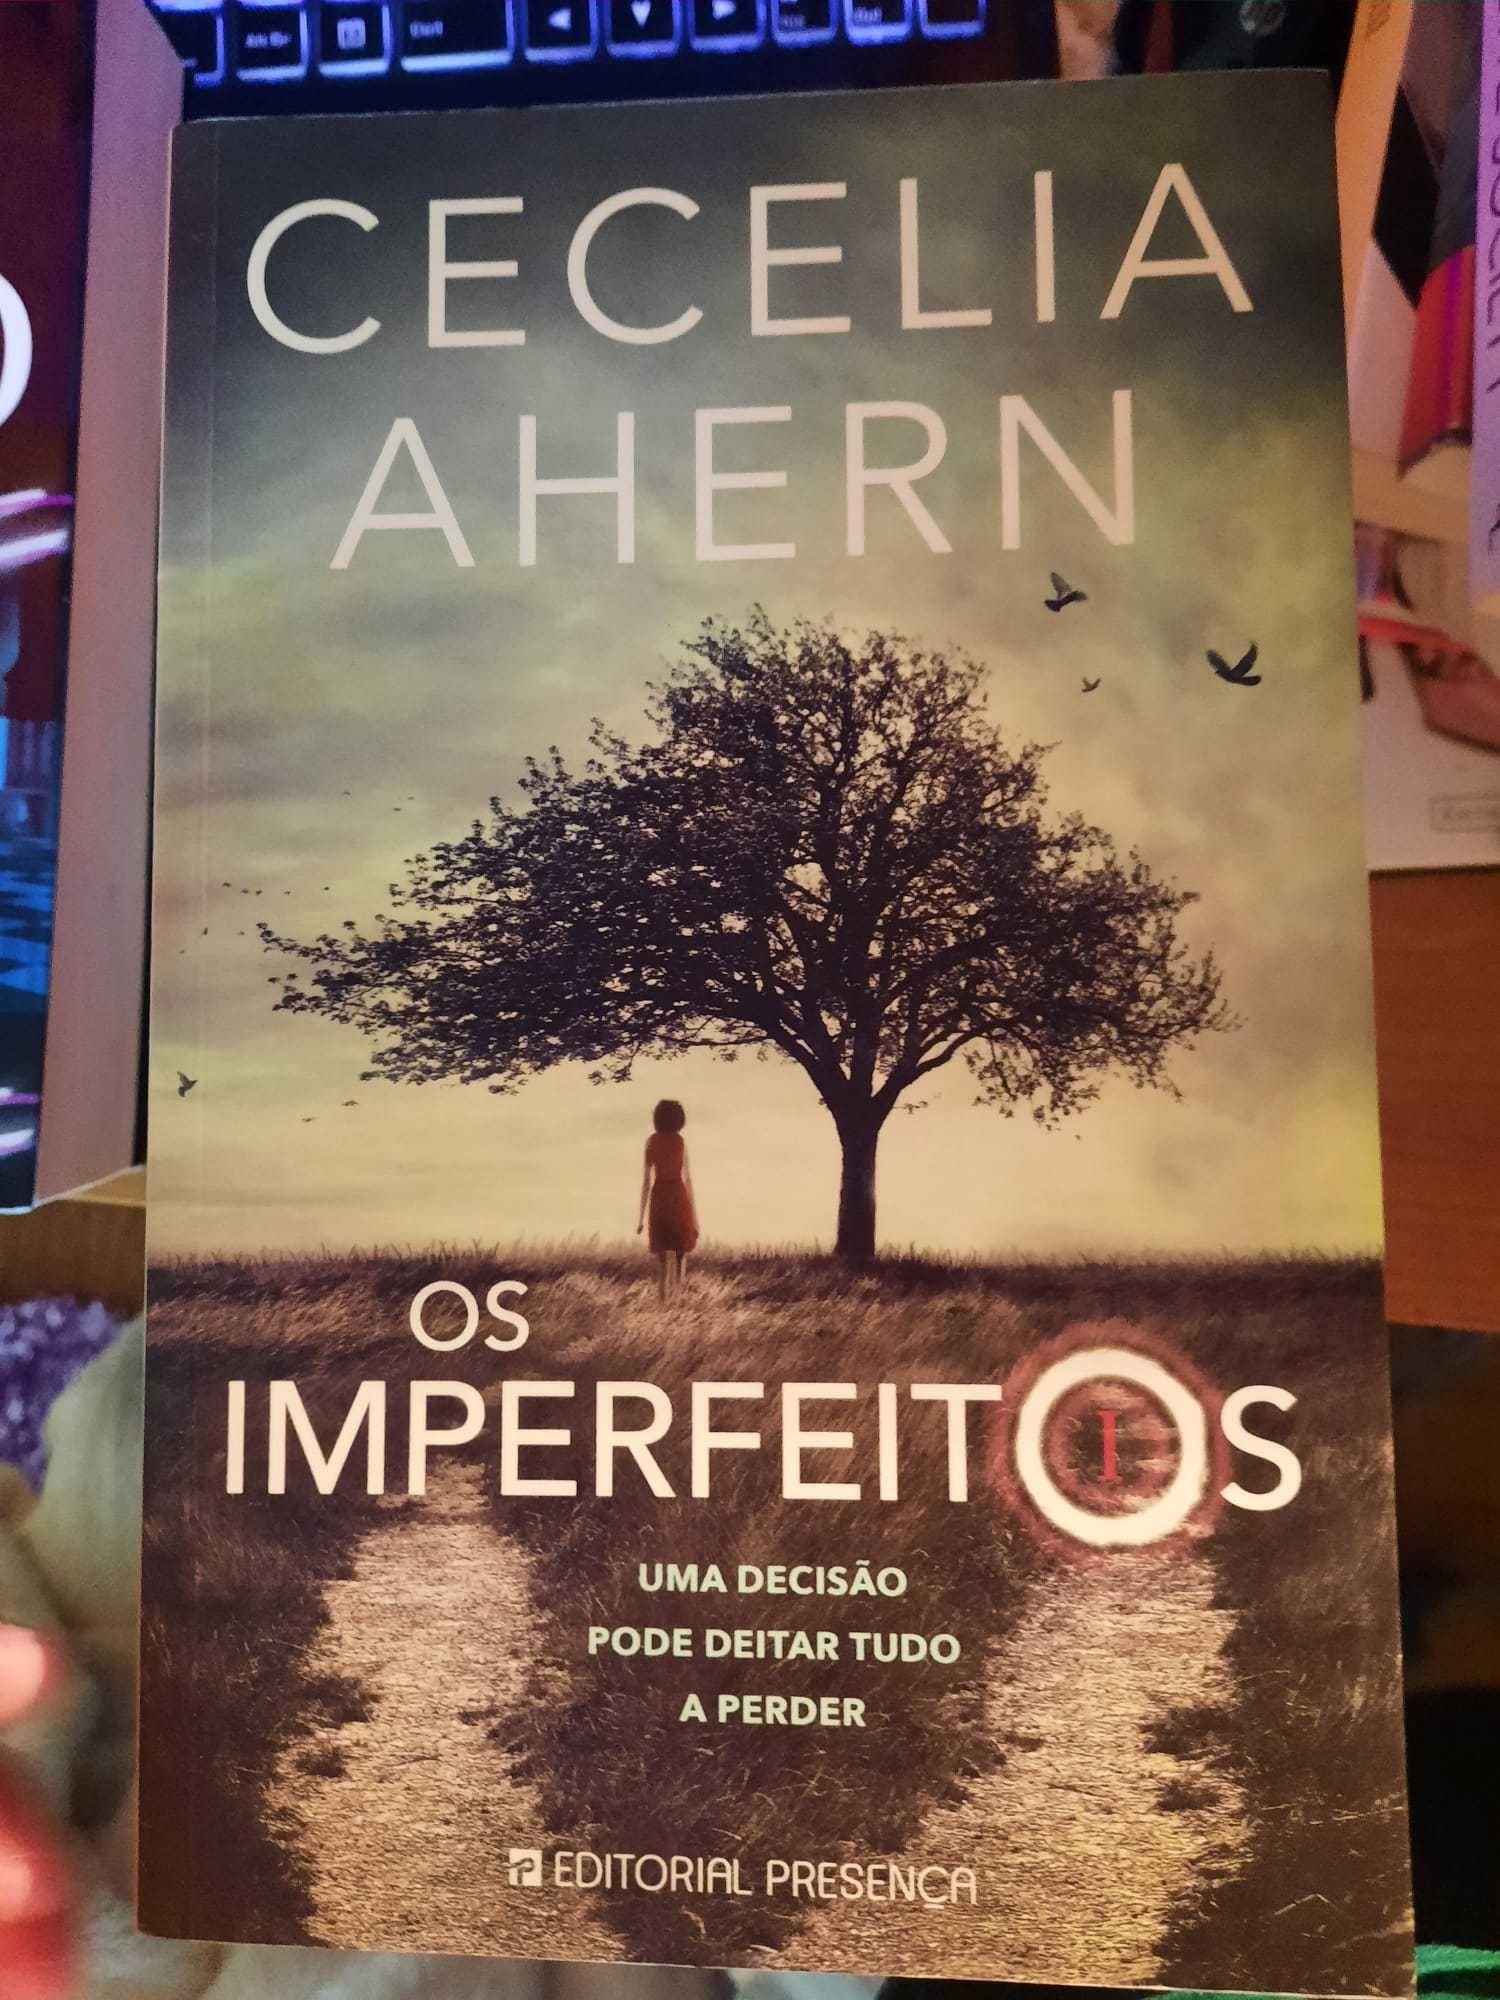 Os imperfeitos de Cecelia Ahern